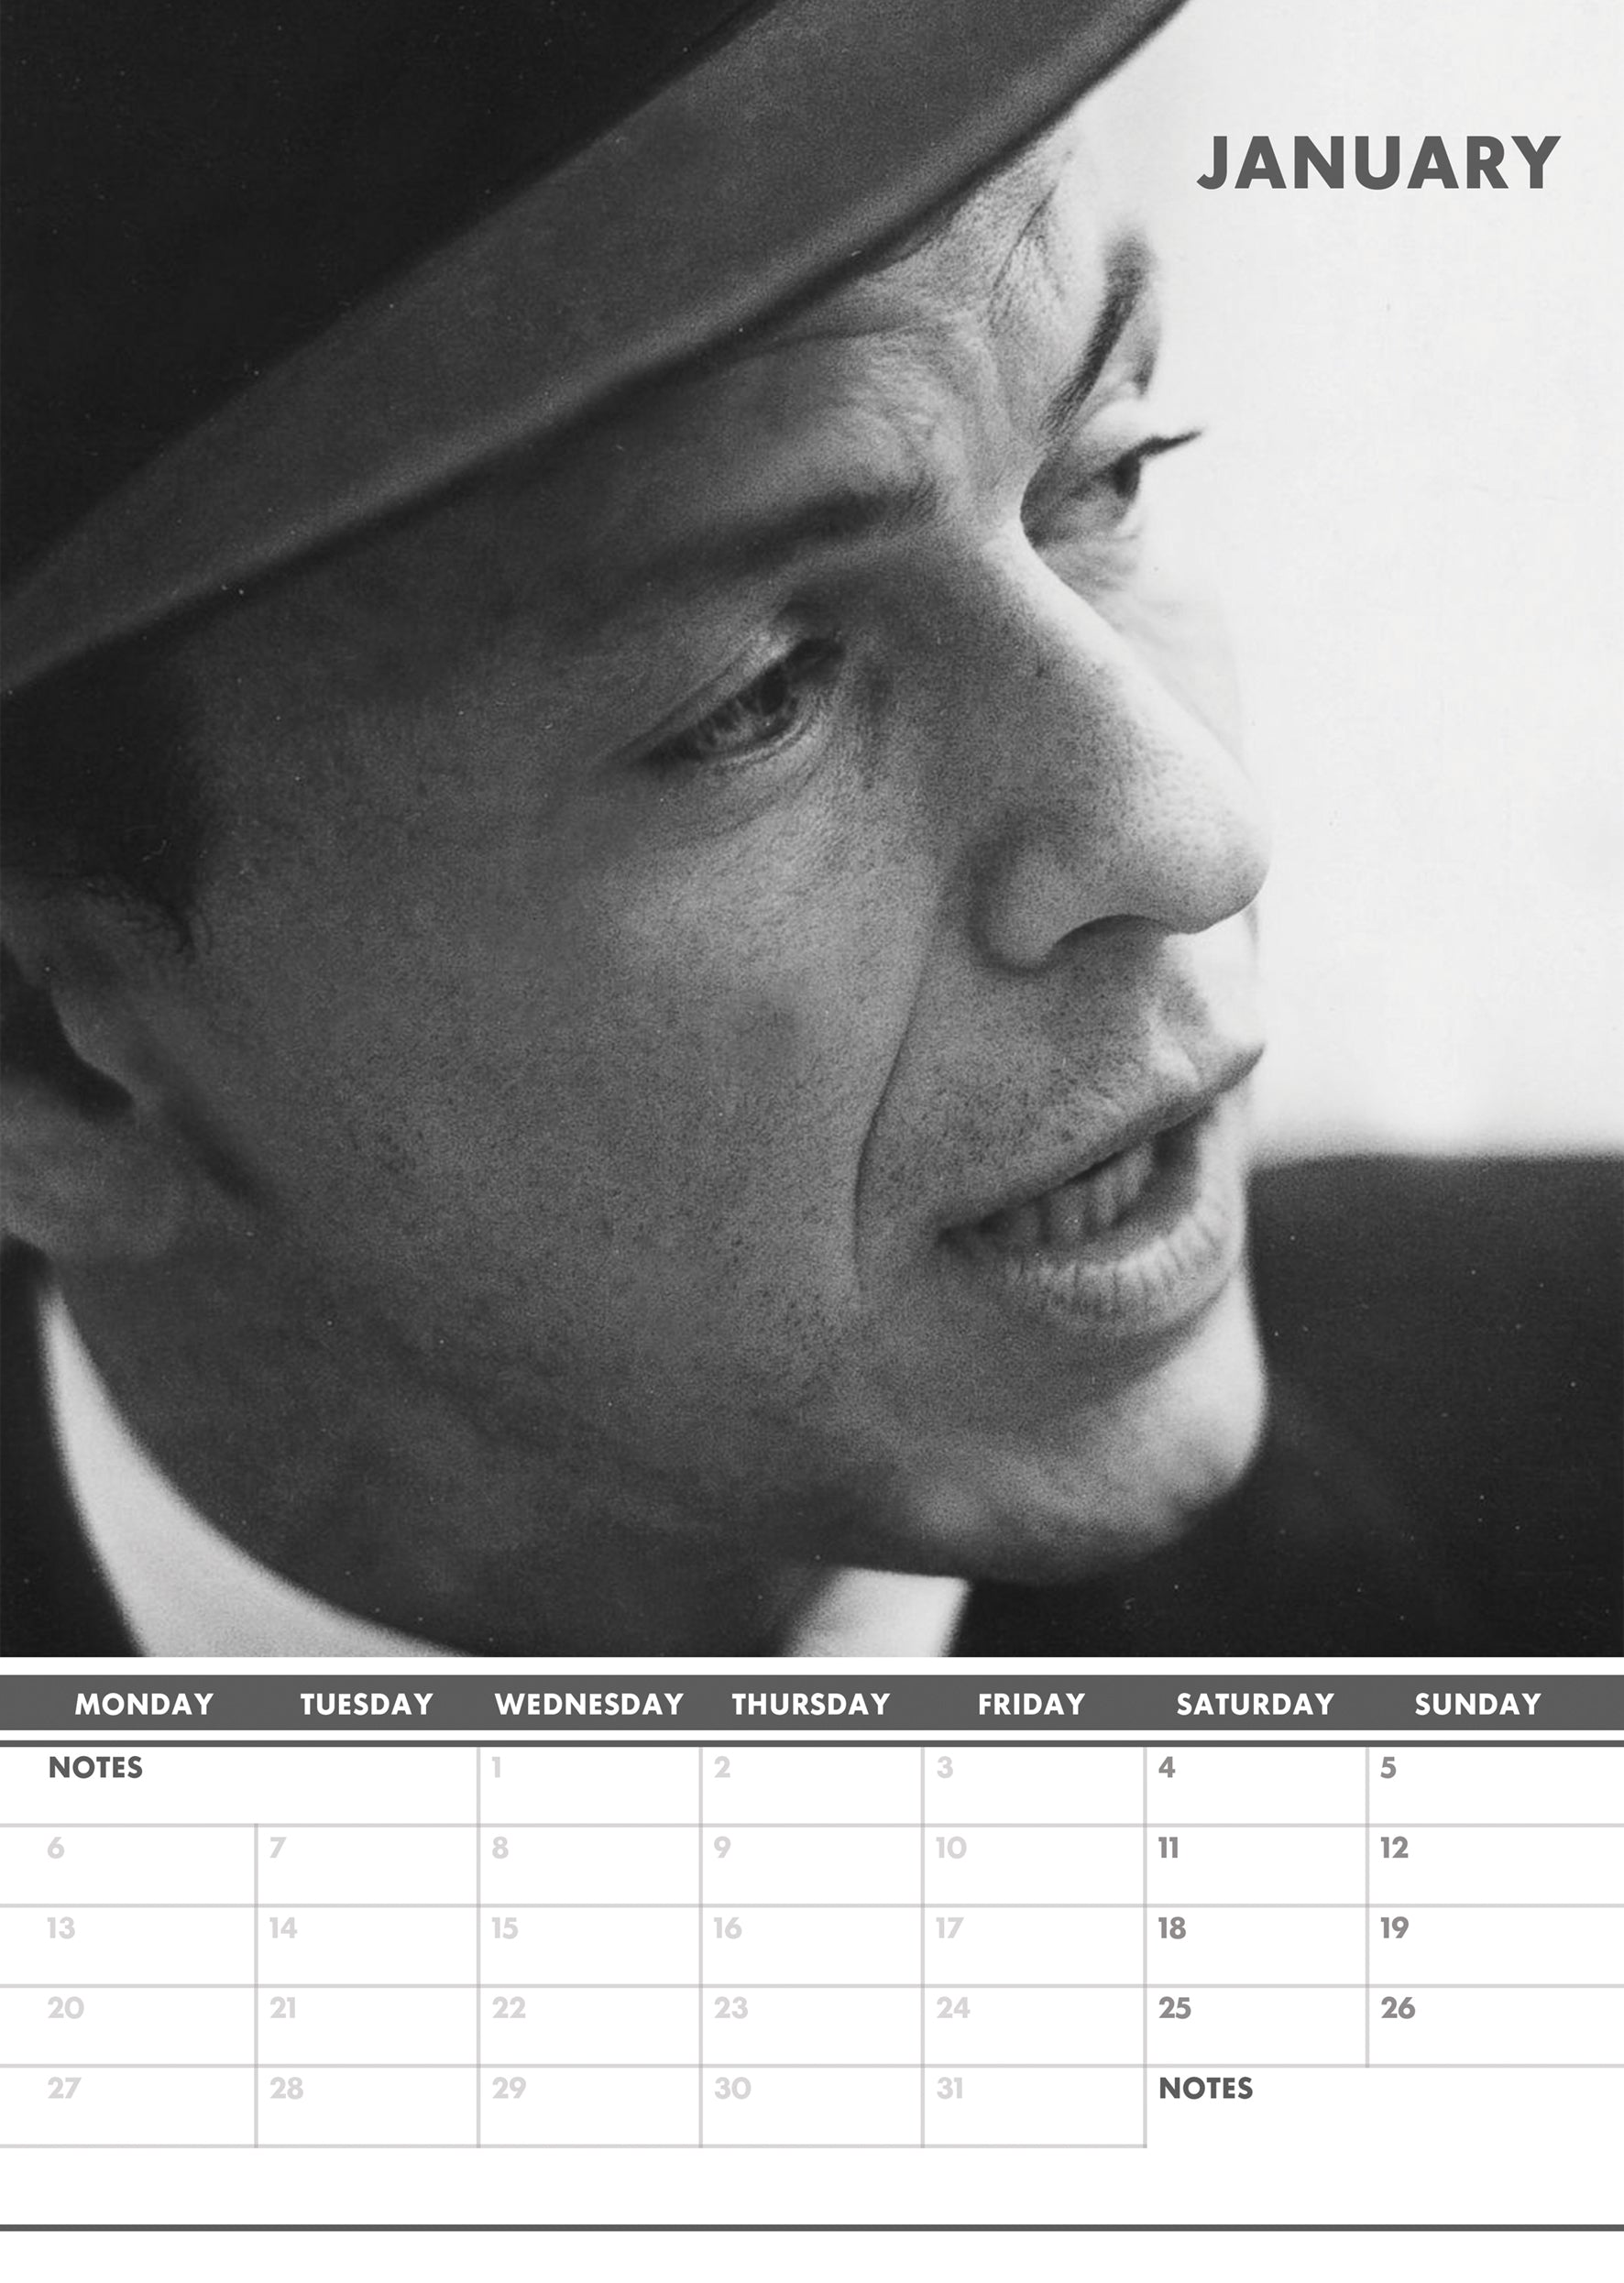 2025 Frank Sinatra - A3 Wall Calendar